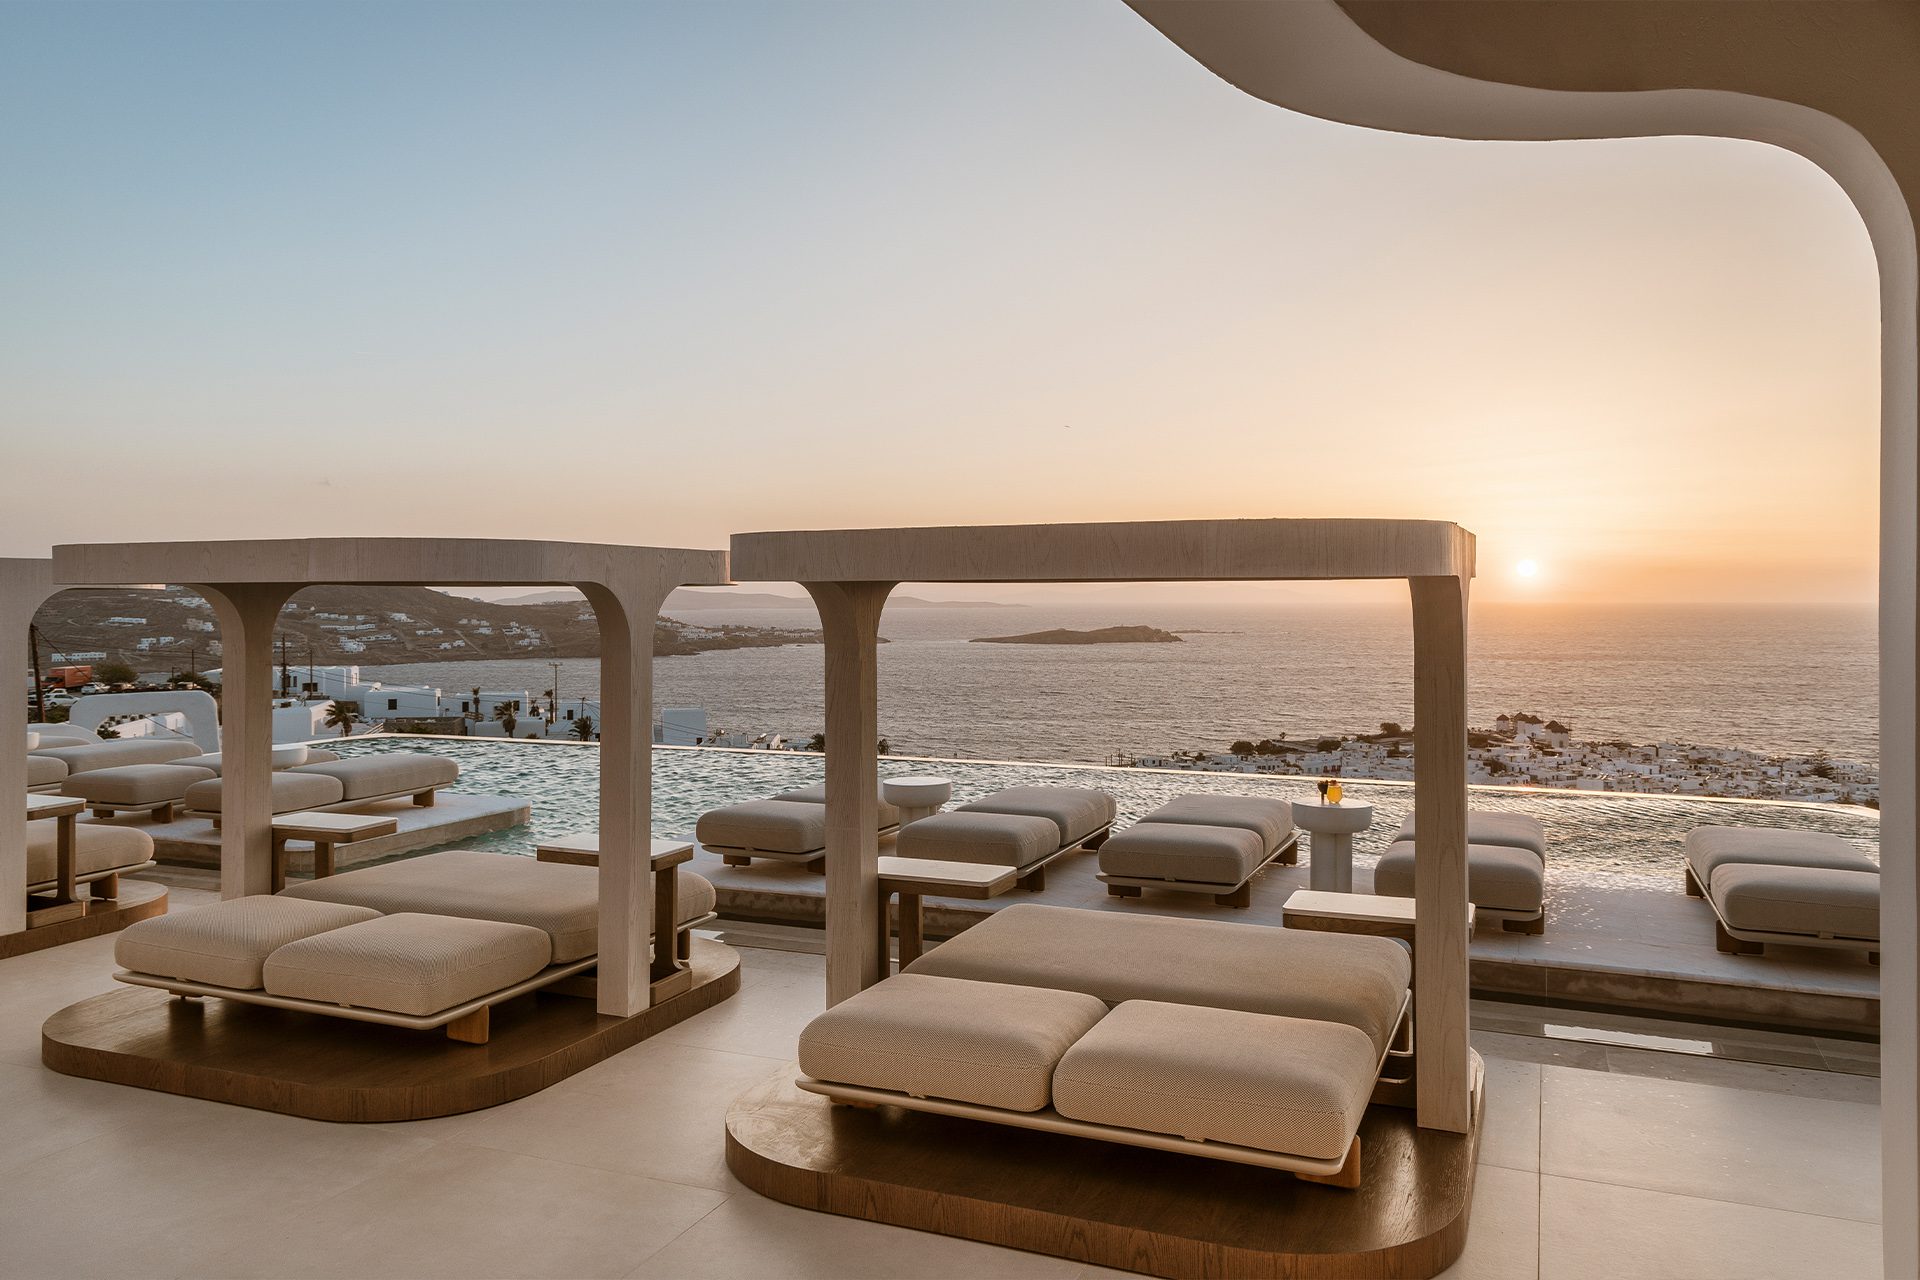 Vondom's Milos sun loungers and daybeds at Lovia Mykonos hotel.